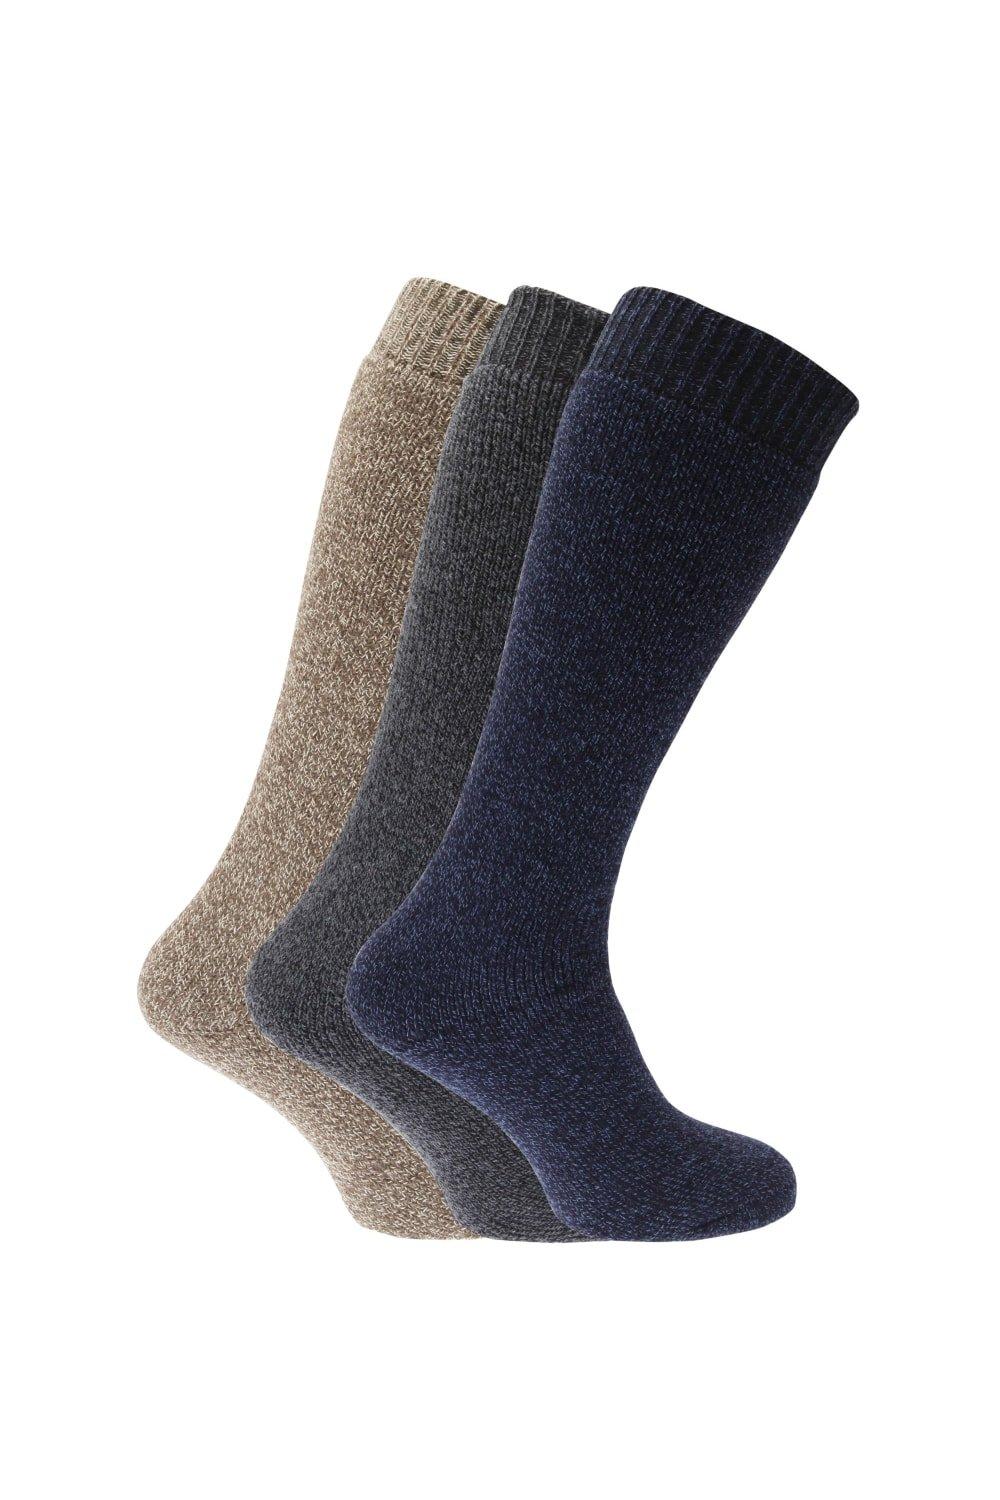 Thermal Wool Blend Long Wellington Boot Socks (Pack Of 3)